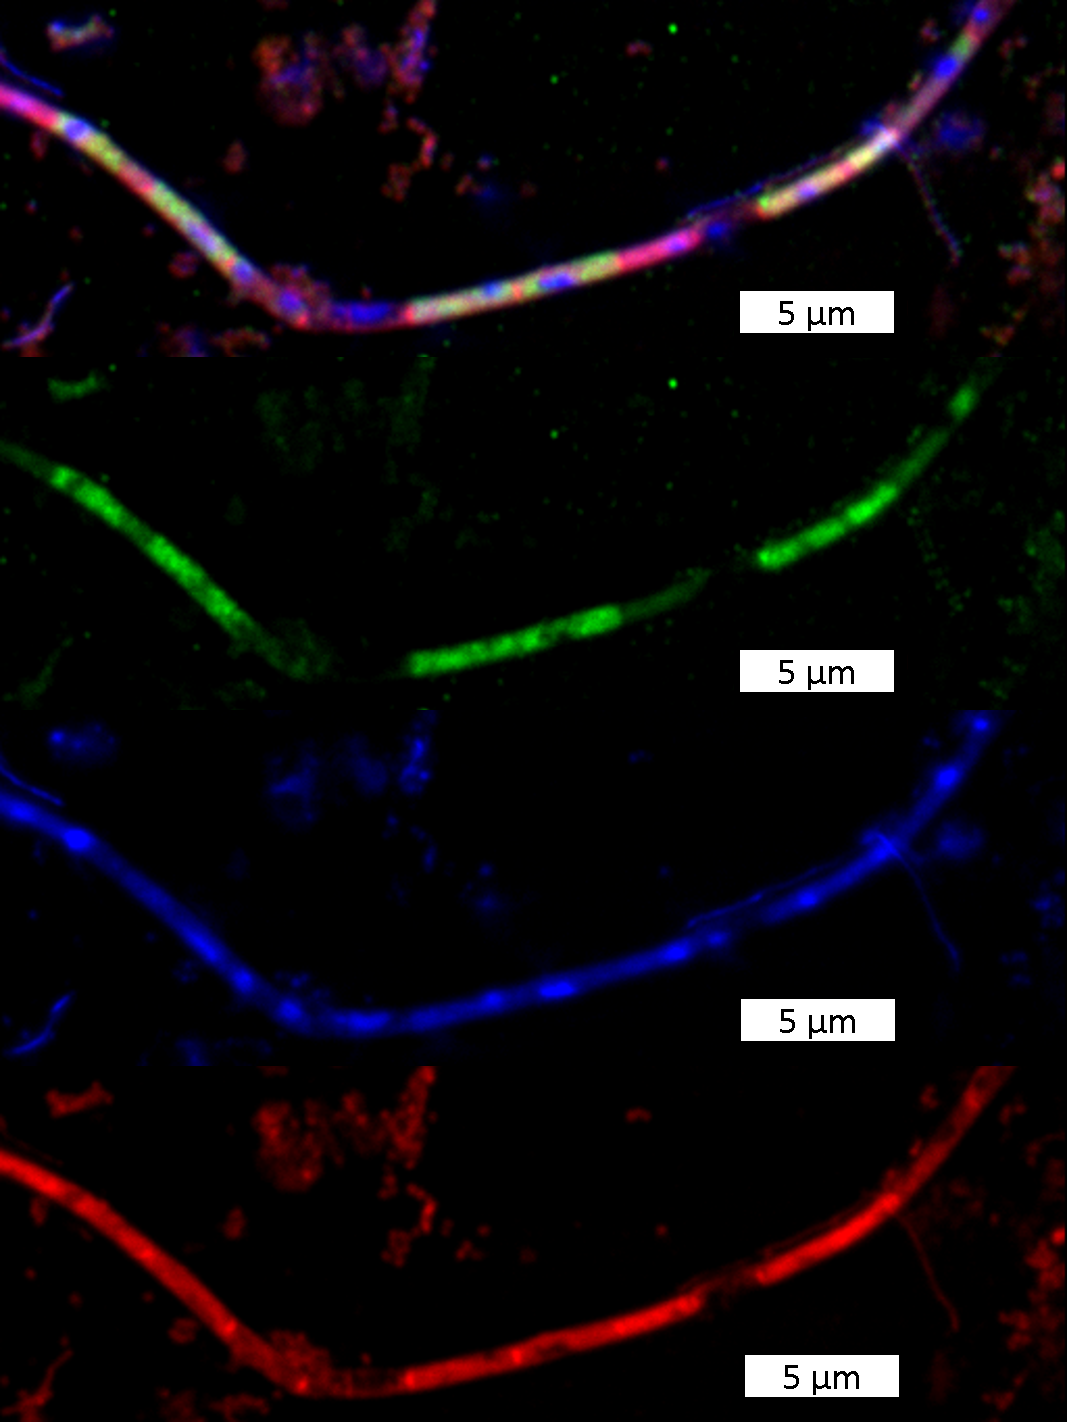 Images of Methanosaeta, a filamentous methanogenic archaeon, from the fluorescence microscope.